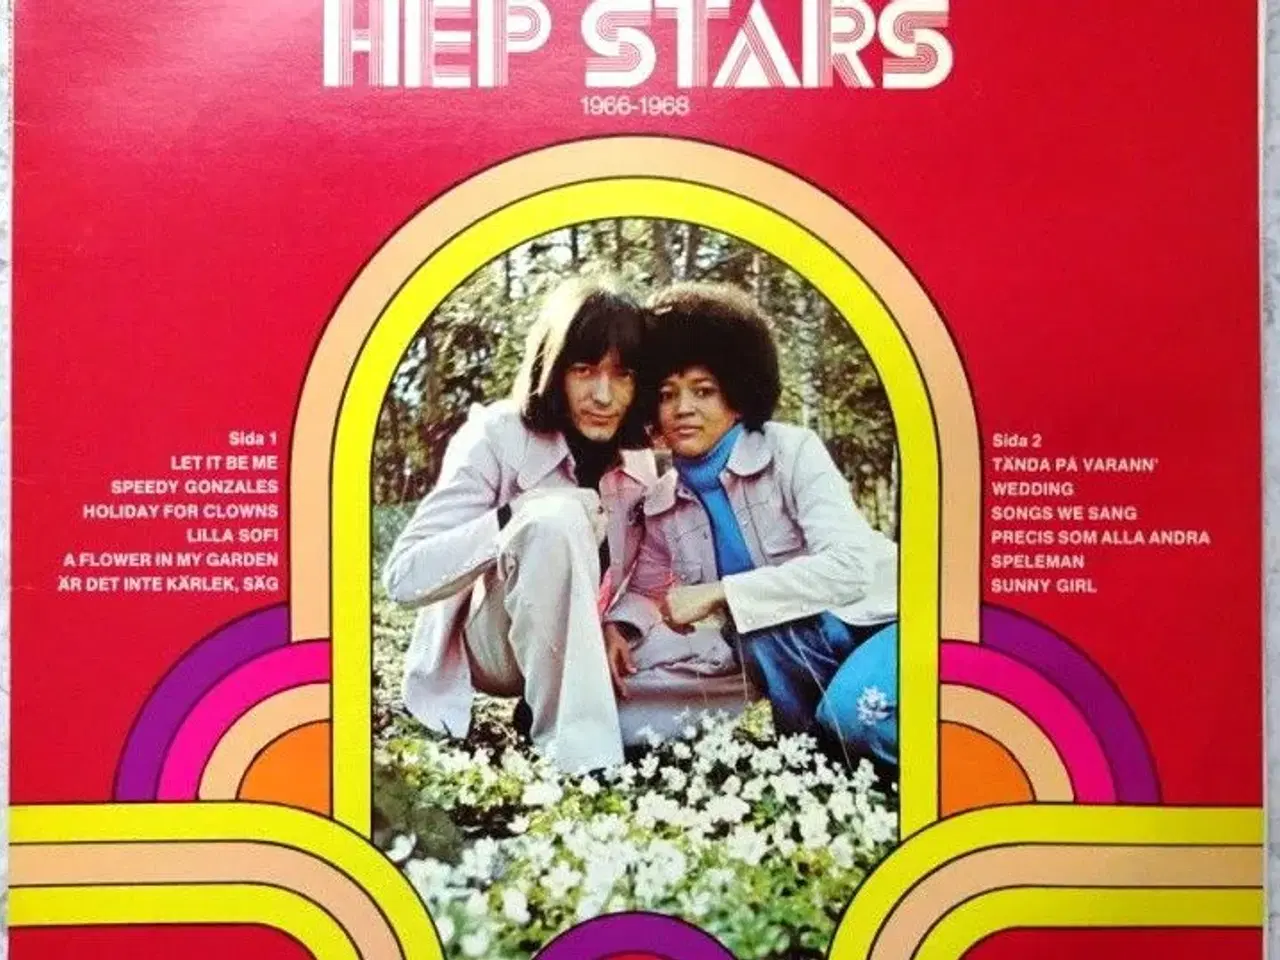 Billede 1 - Svenne og Lotta samt Hepstars. Vinyl LP